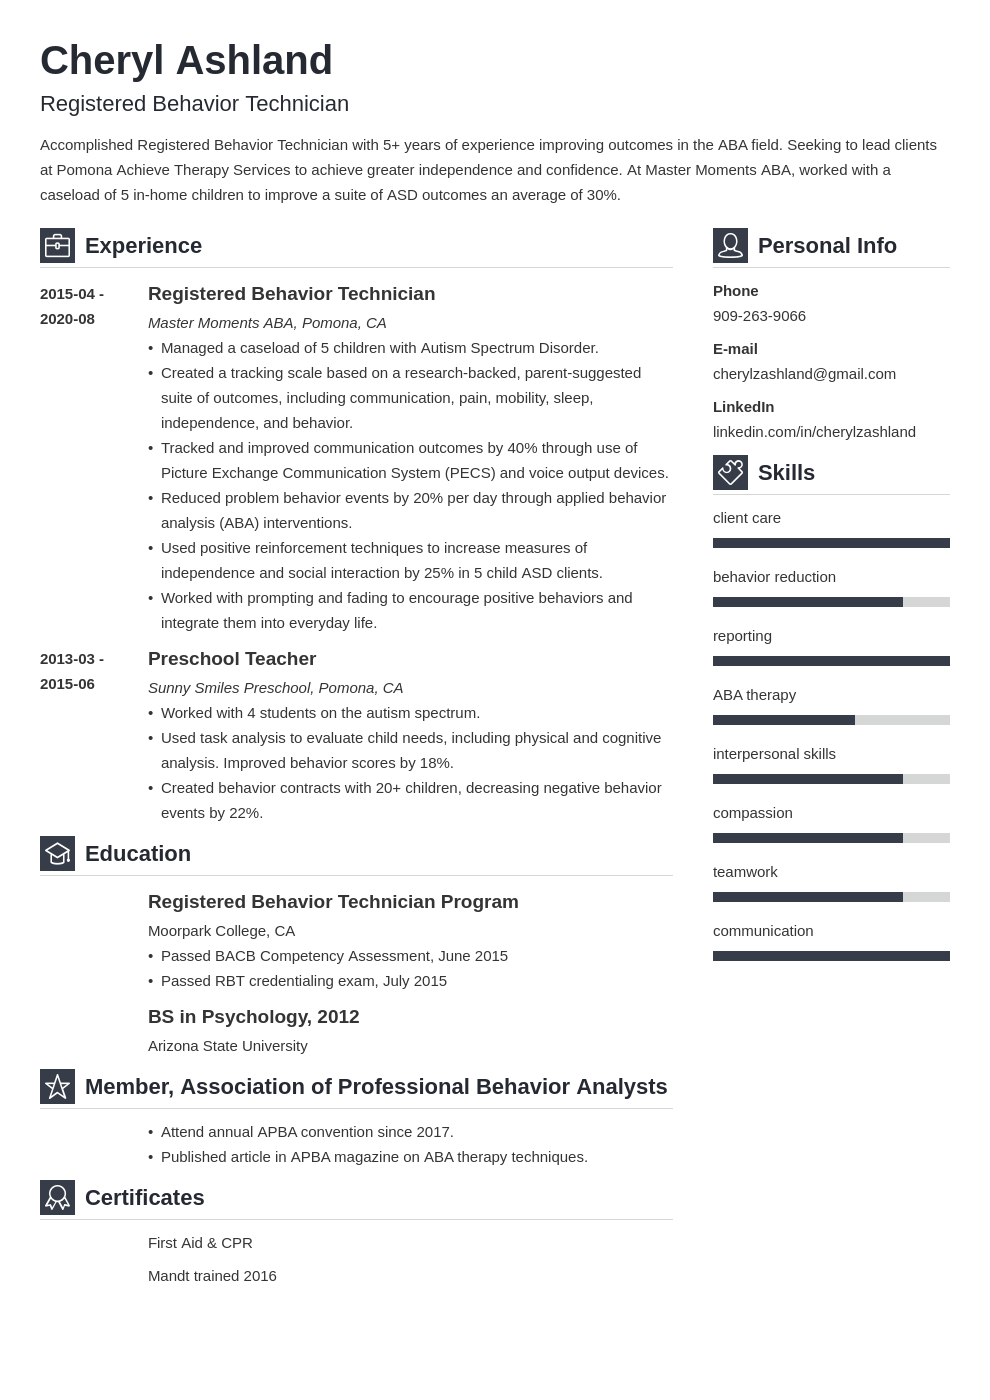 rbt-resume-registered-behavior-tech-examples-guide